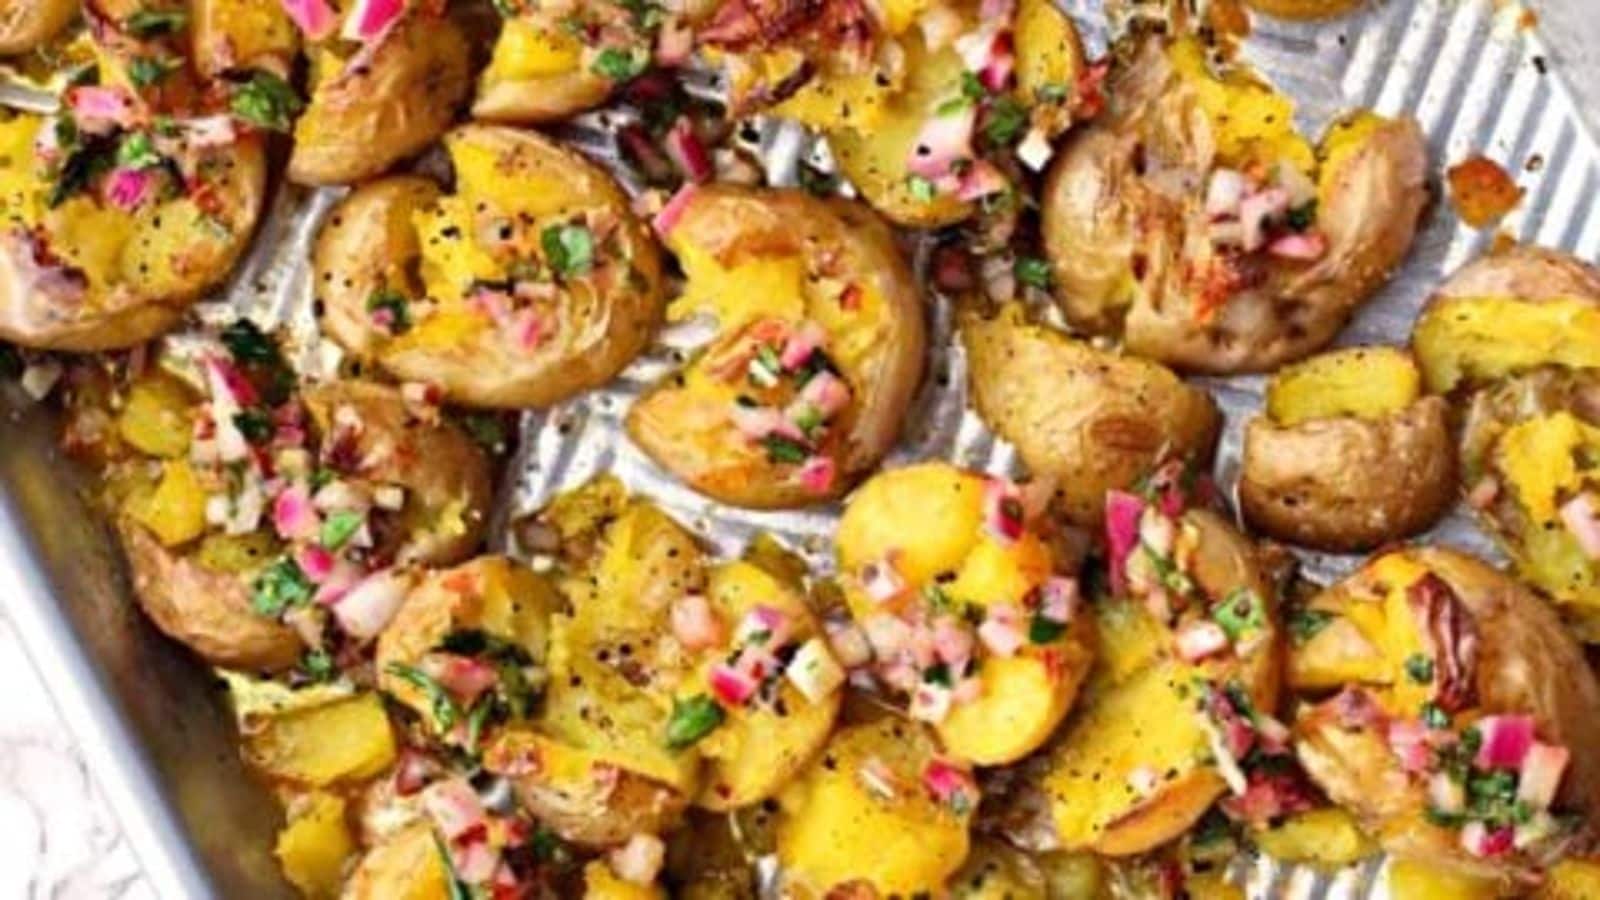 Try this Argentine chimichurri potato salad recipe